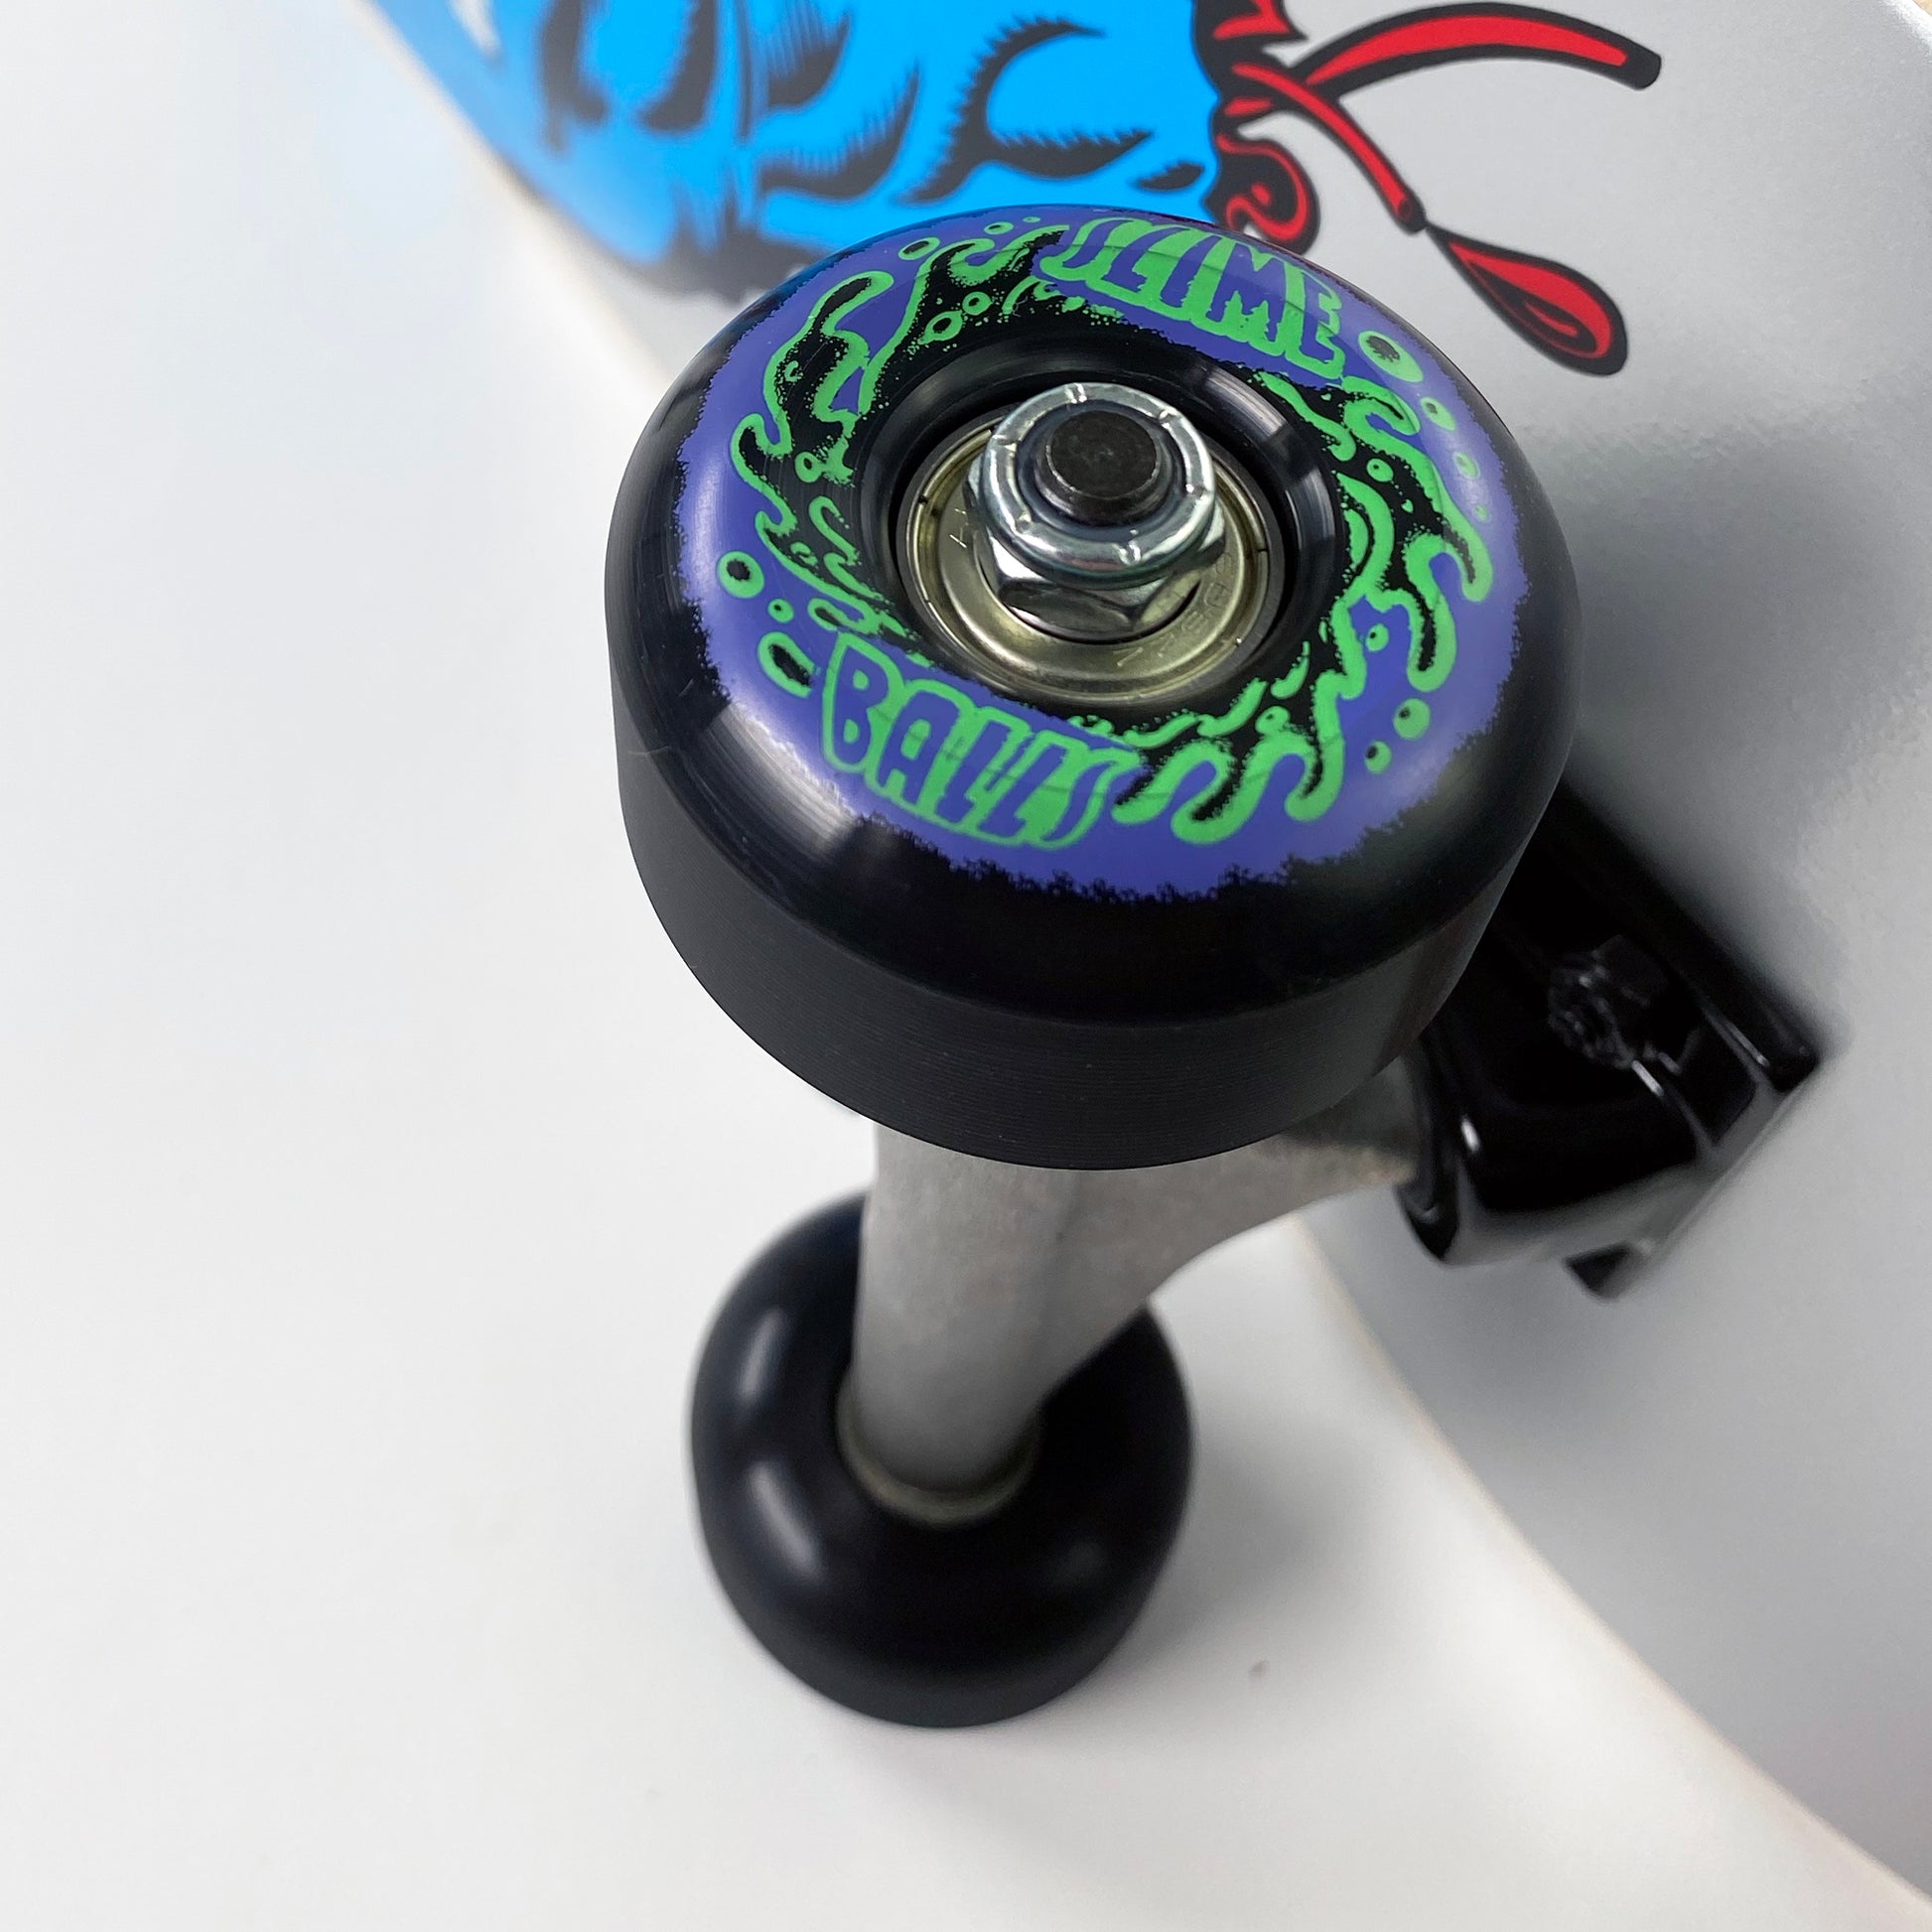 Santa Cruz Screaming Hand Complete Skateboard 8.25" - Silver / Blue - Prime Delux Store